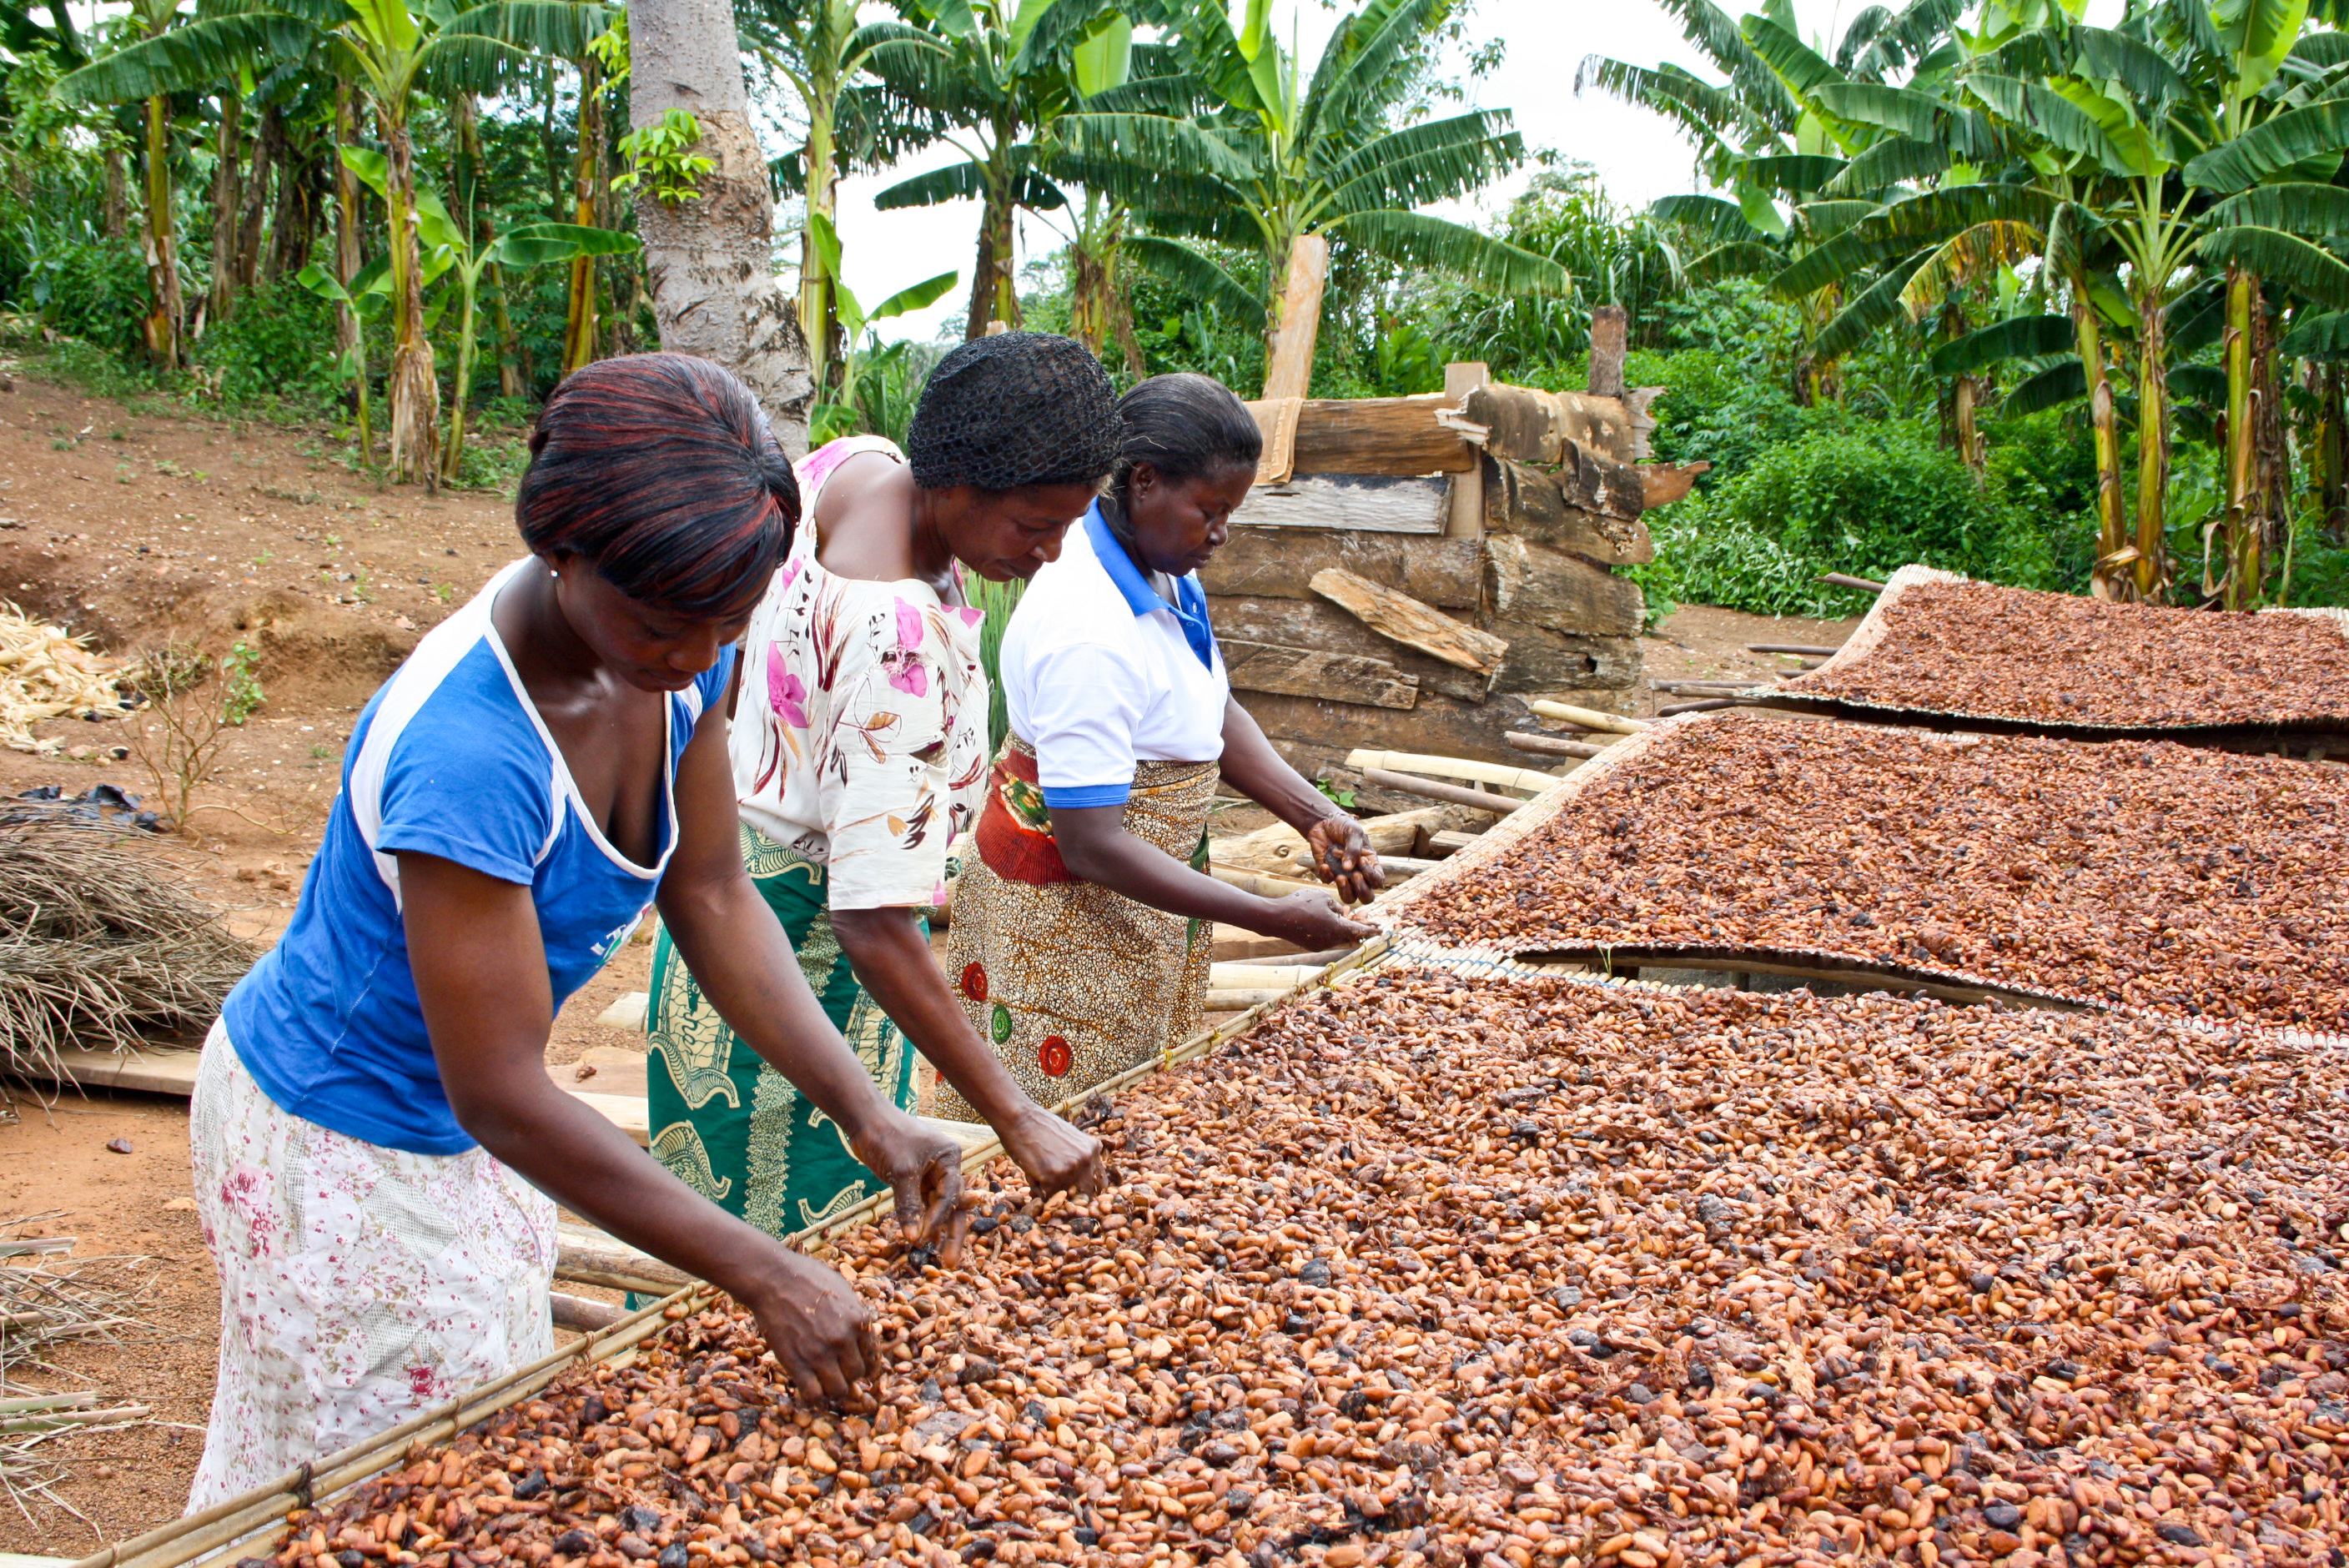 Drying cocoa beans in Ghana © UTZ Certified